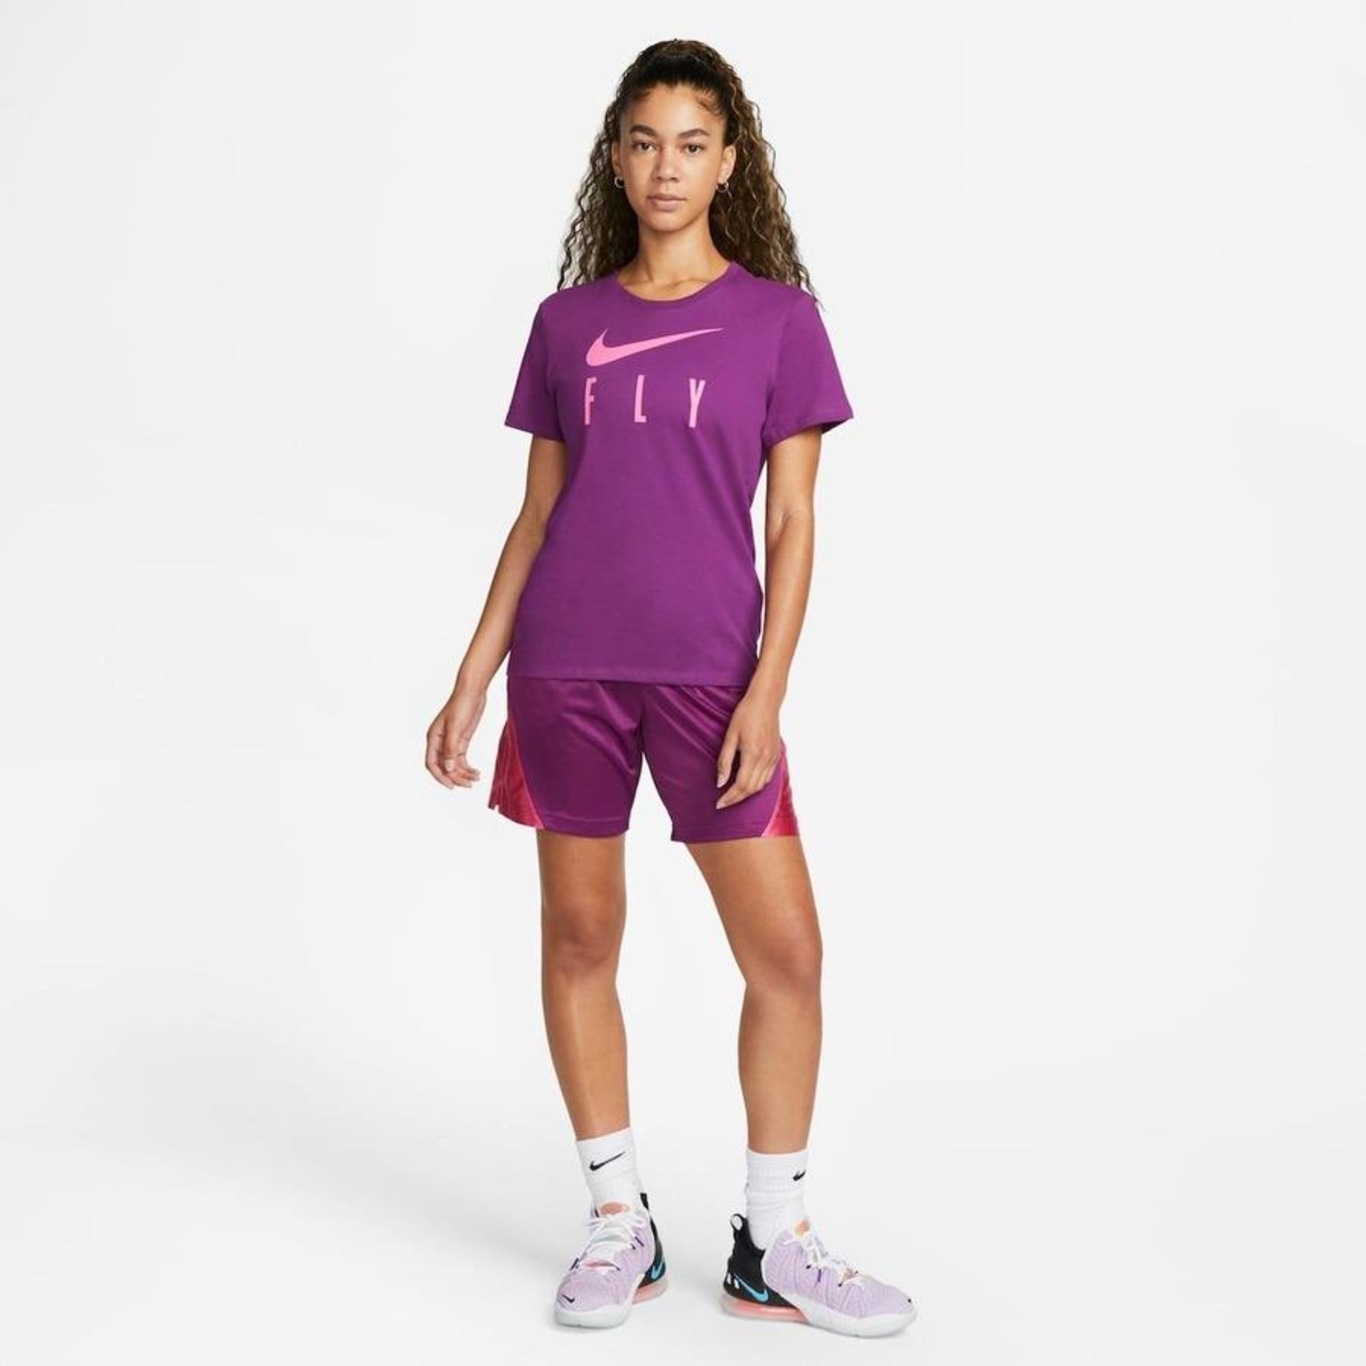 Camiseta Nike Dri-fit Swoosh Fly Feminina